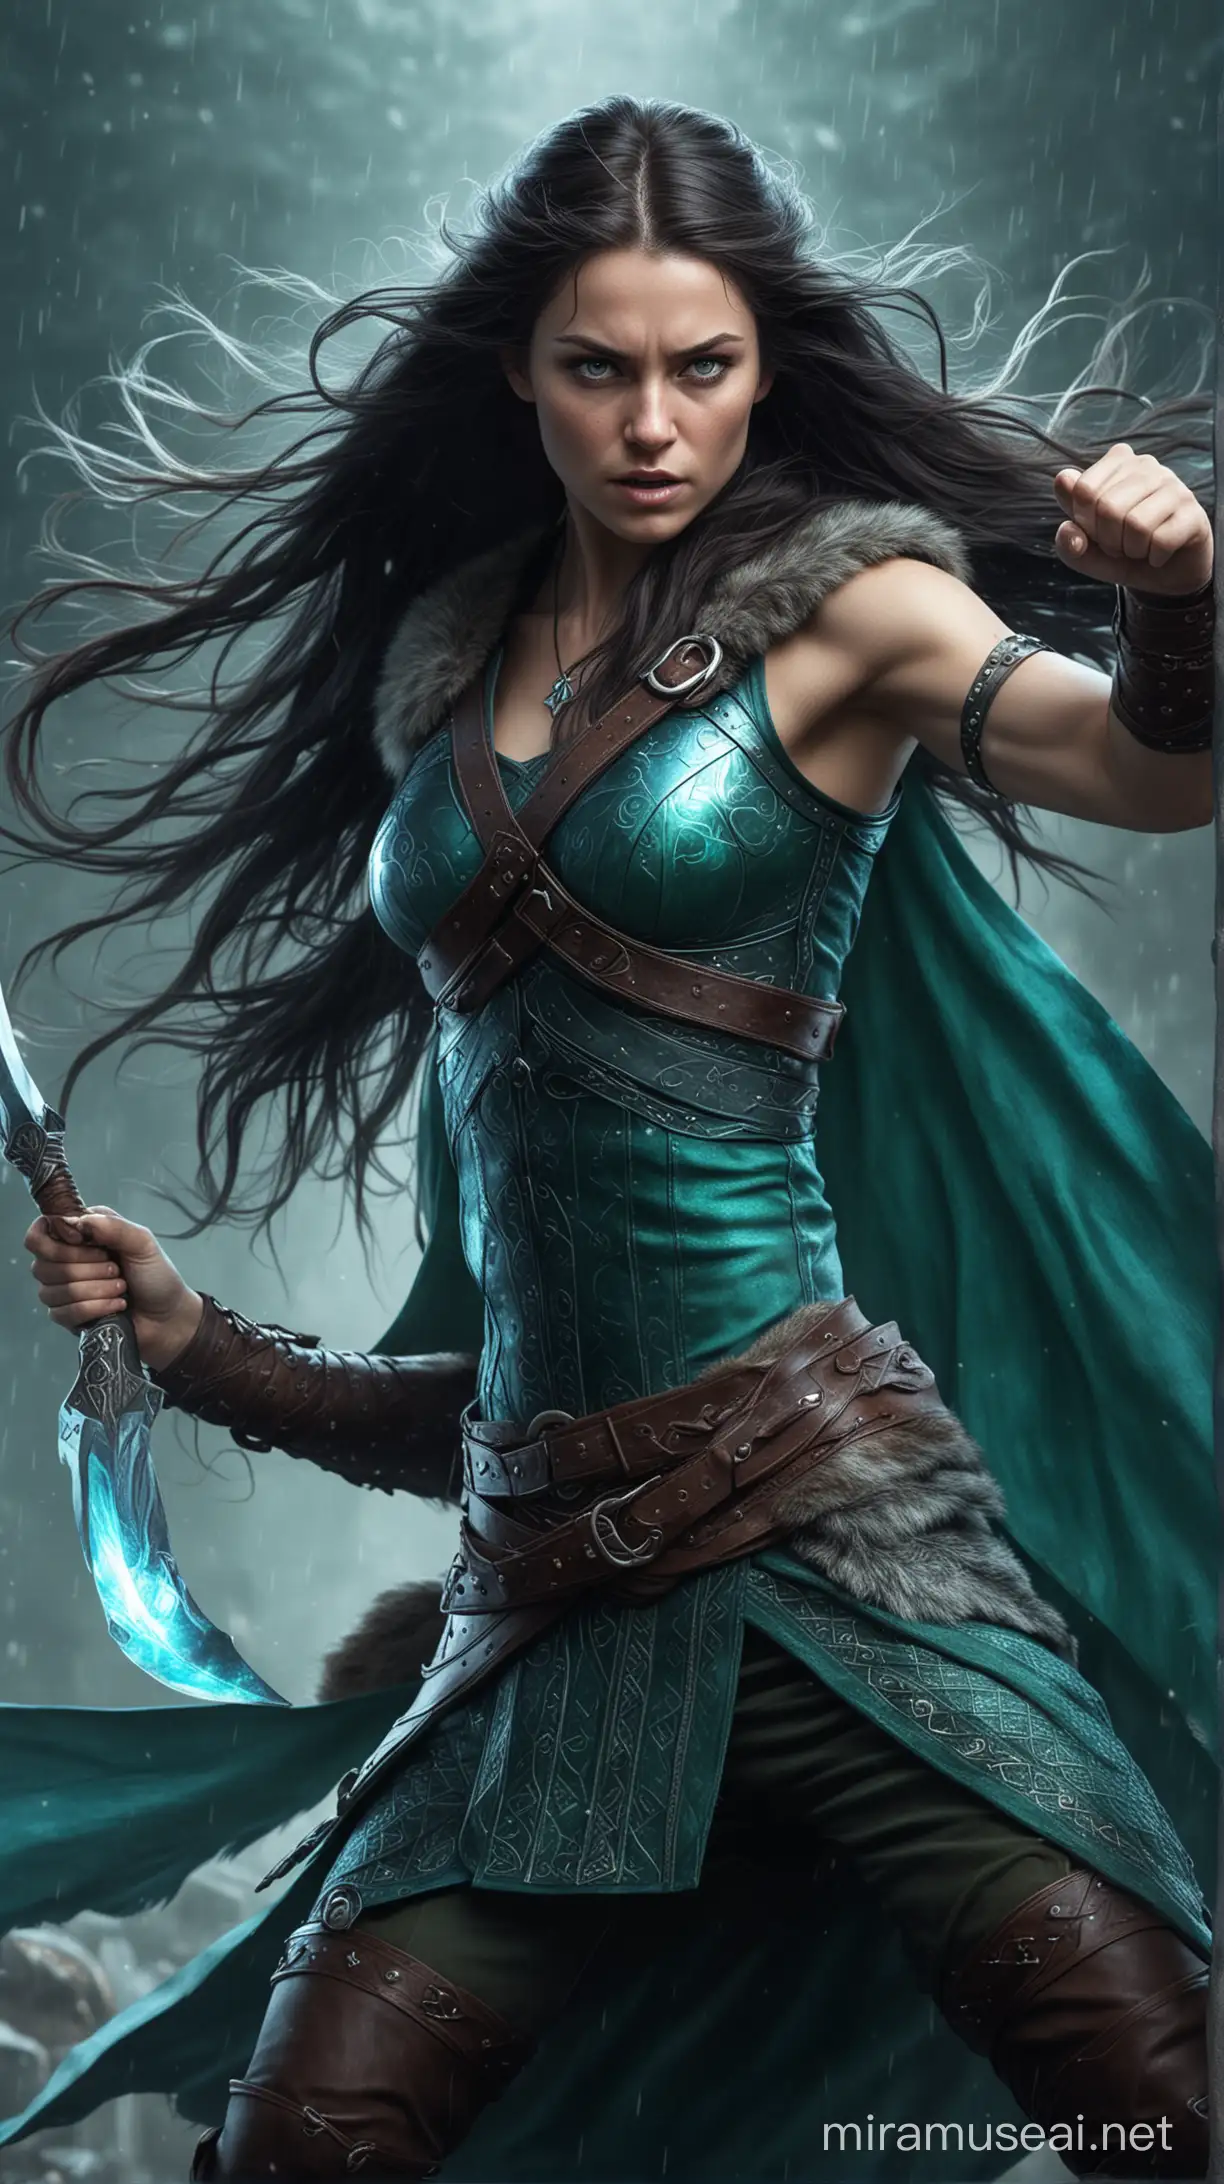 Female Viking, long dark hair, iridescent, blue-green, fighting pose,